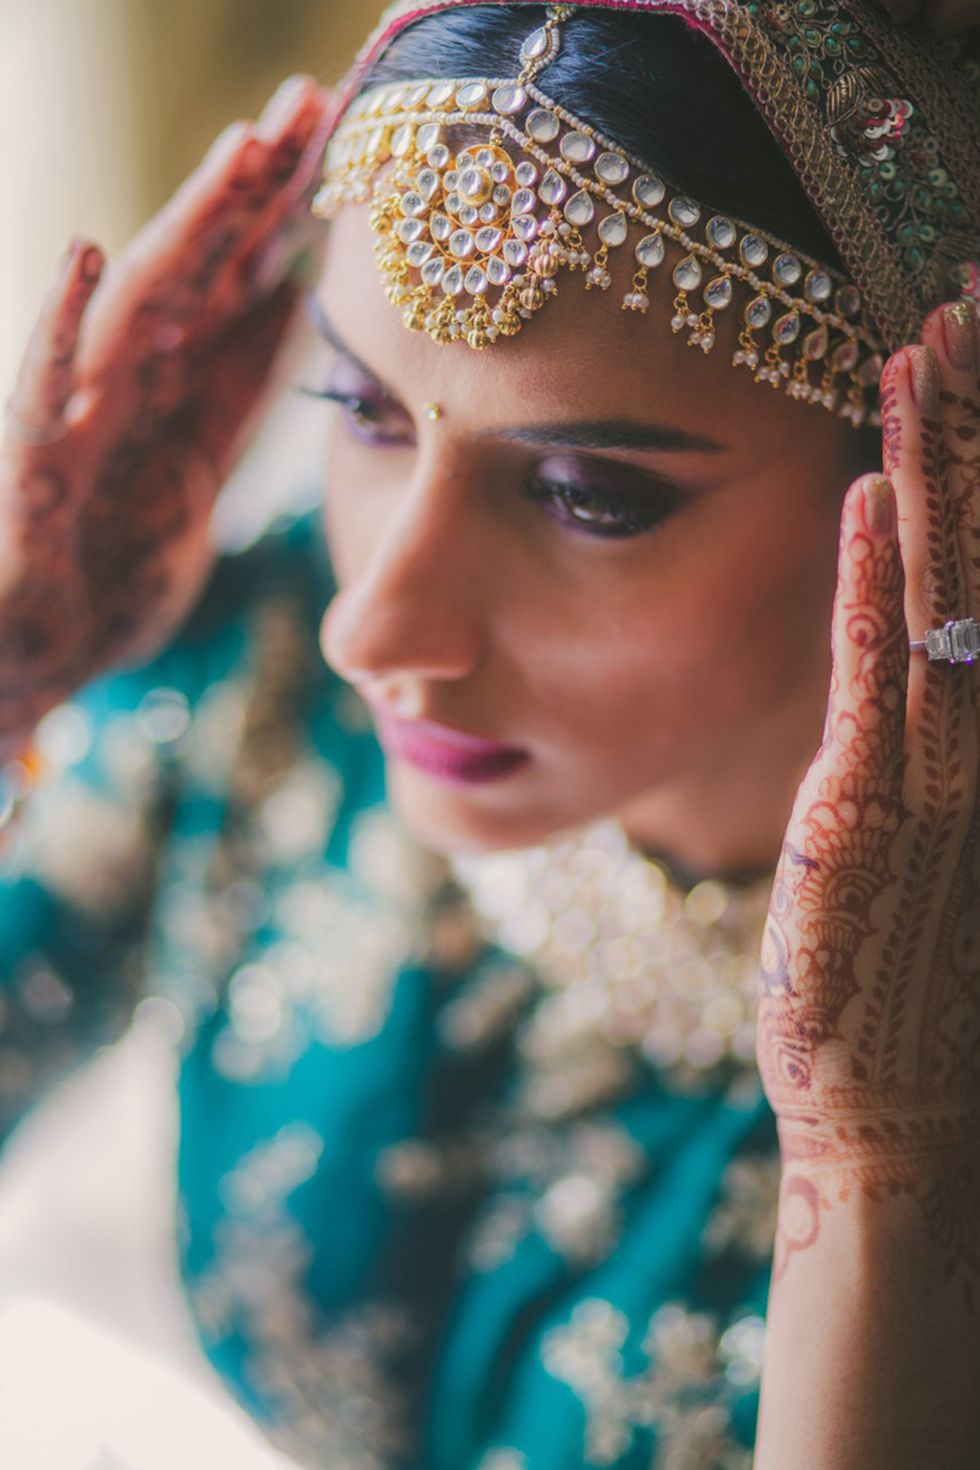 Watch Kavita Cola do her wedding make-up